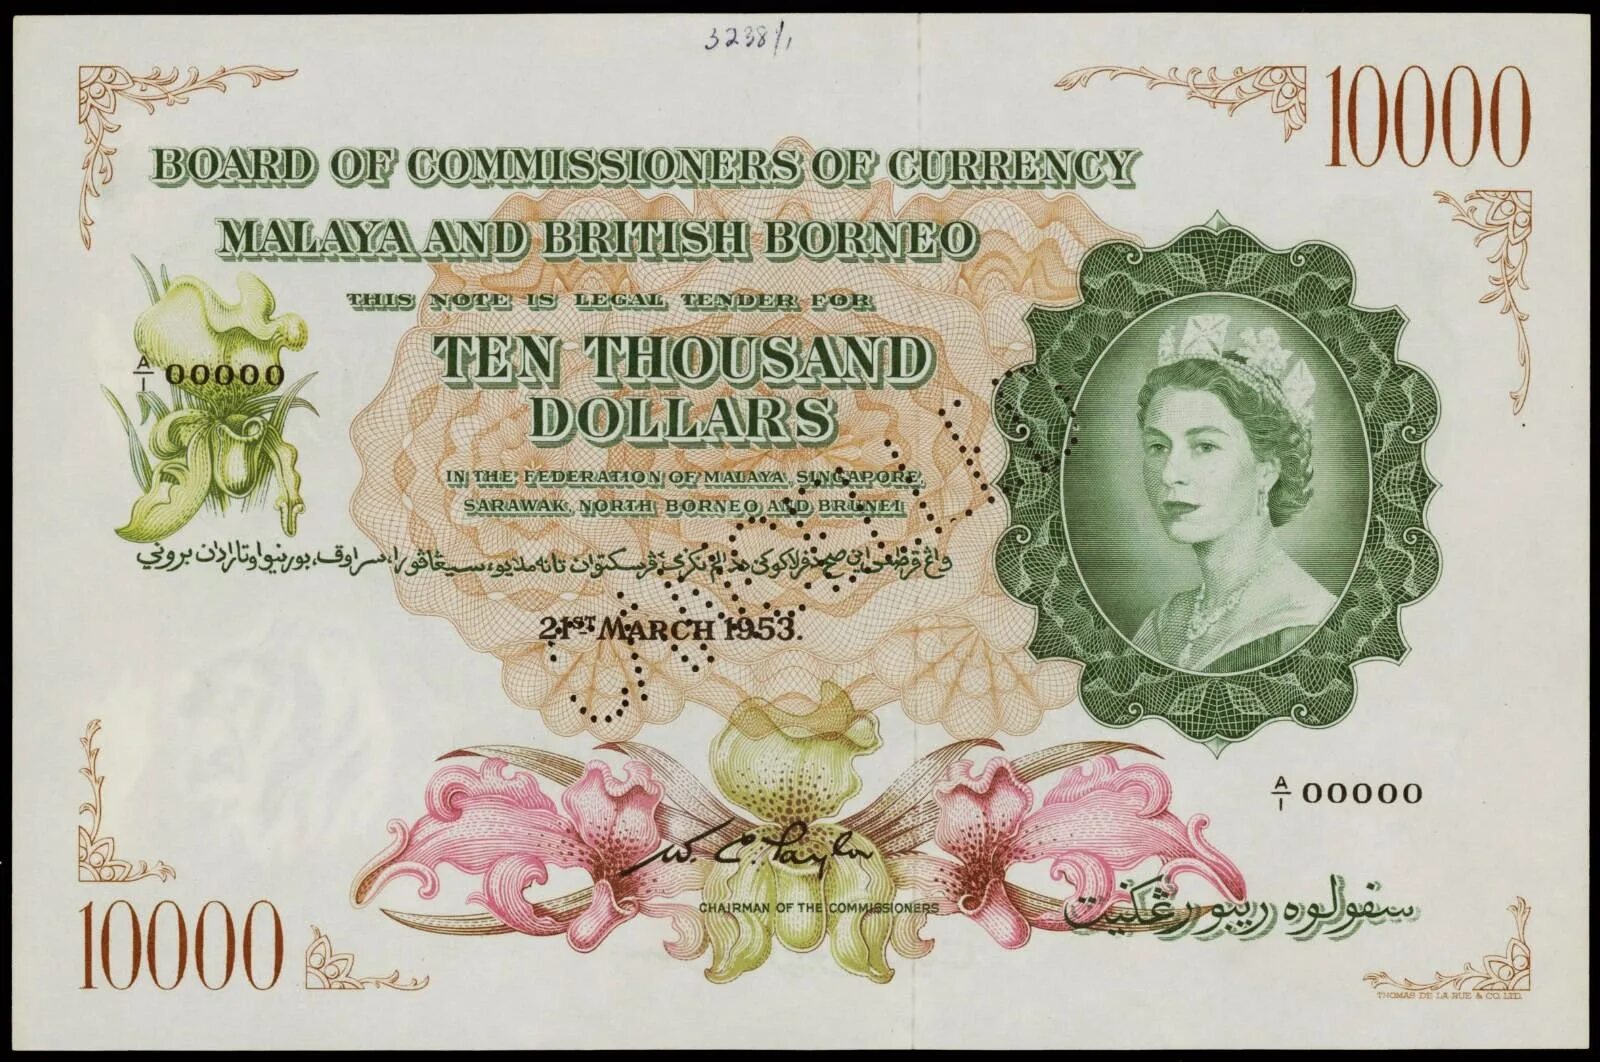 Доллар Малайи и британского Борнео. Британское Борнео. Британская Малайя. Денежная купюра Малайи.